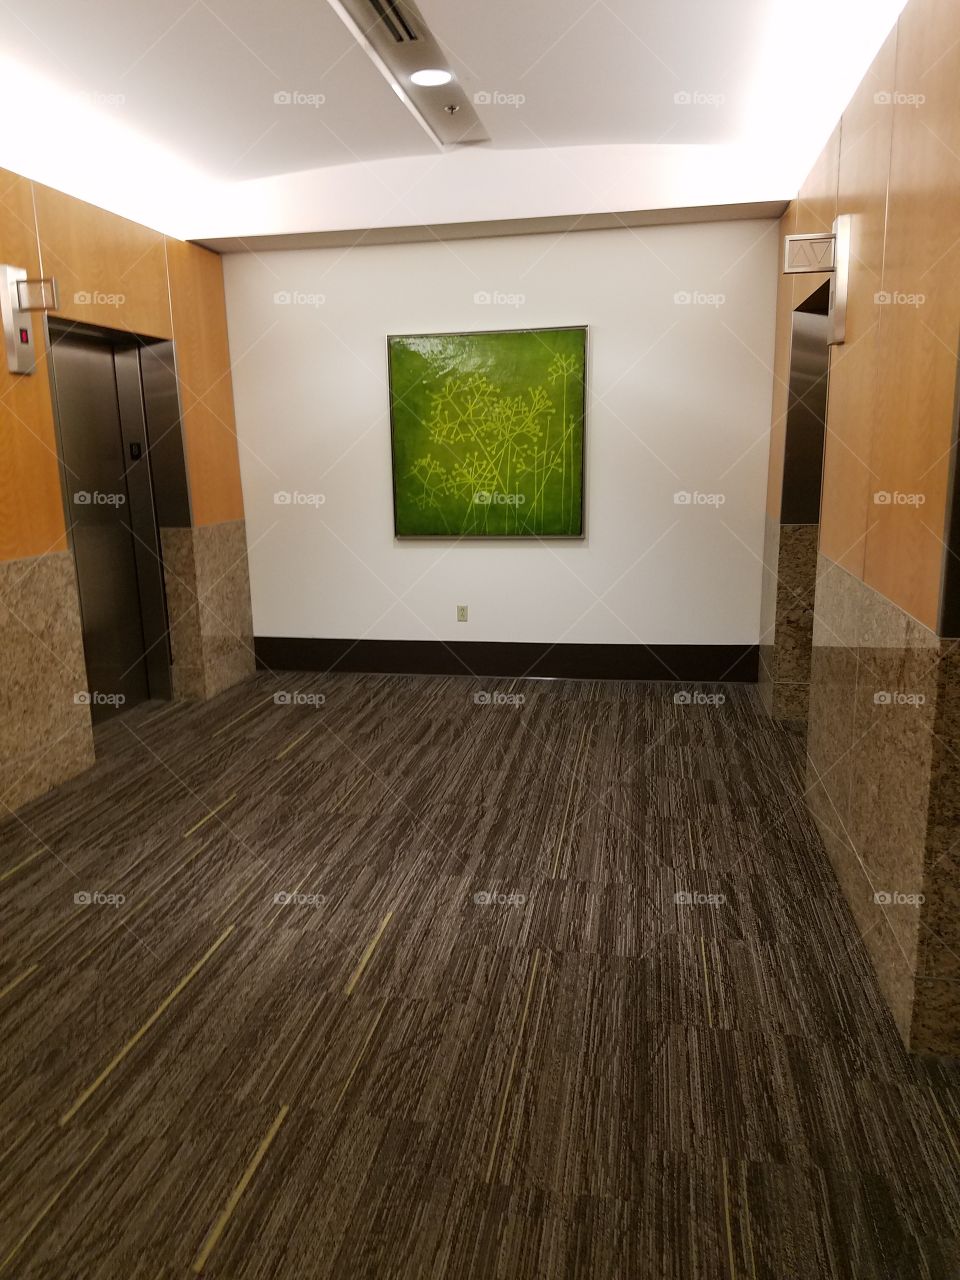 elevators and art